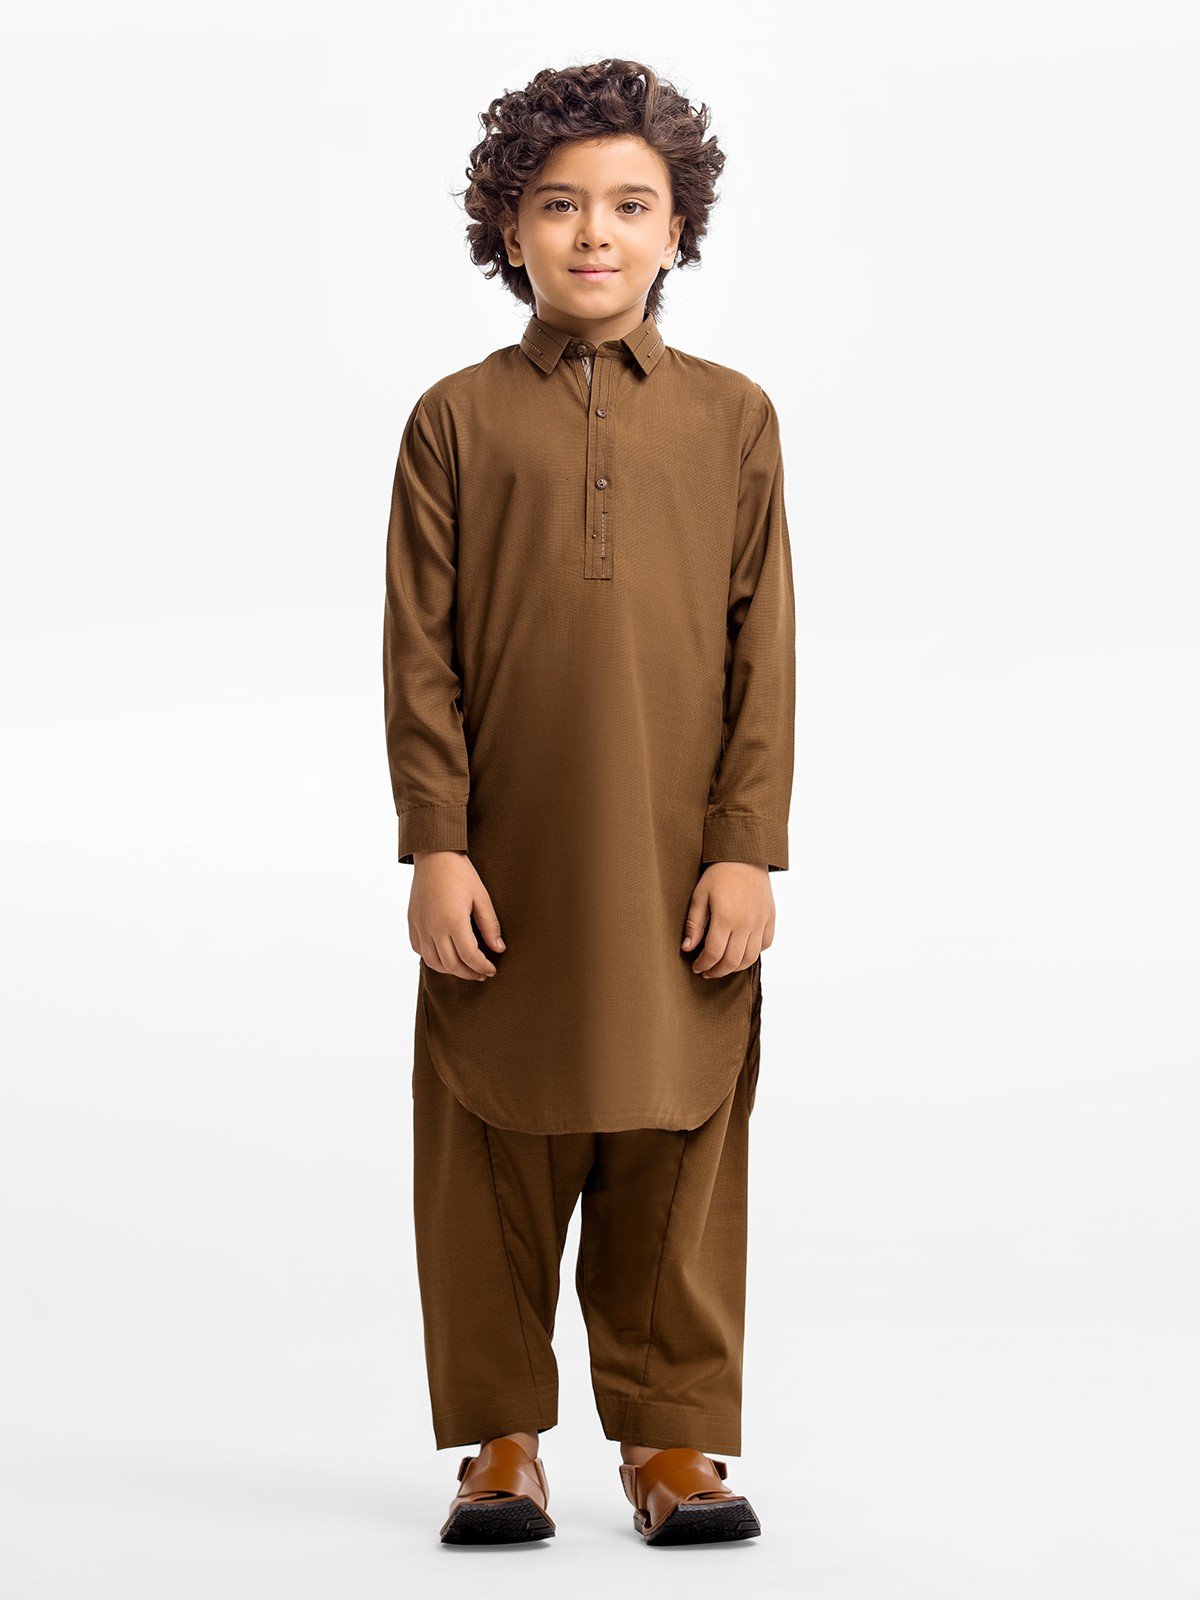 Boy's Mehndi Kurta Shalwar - EBTKS23-3904